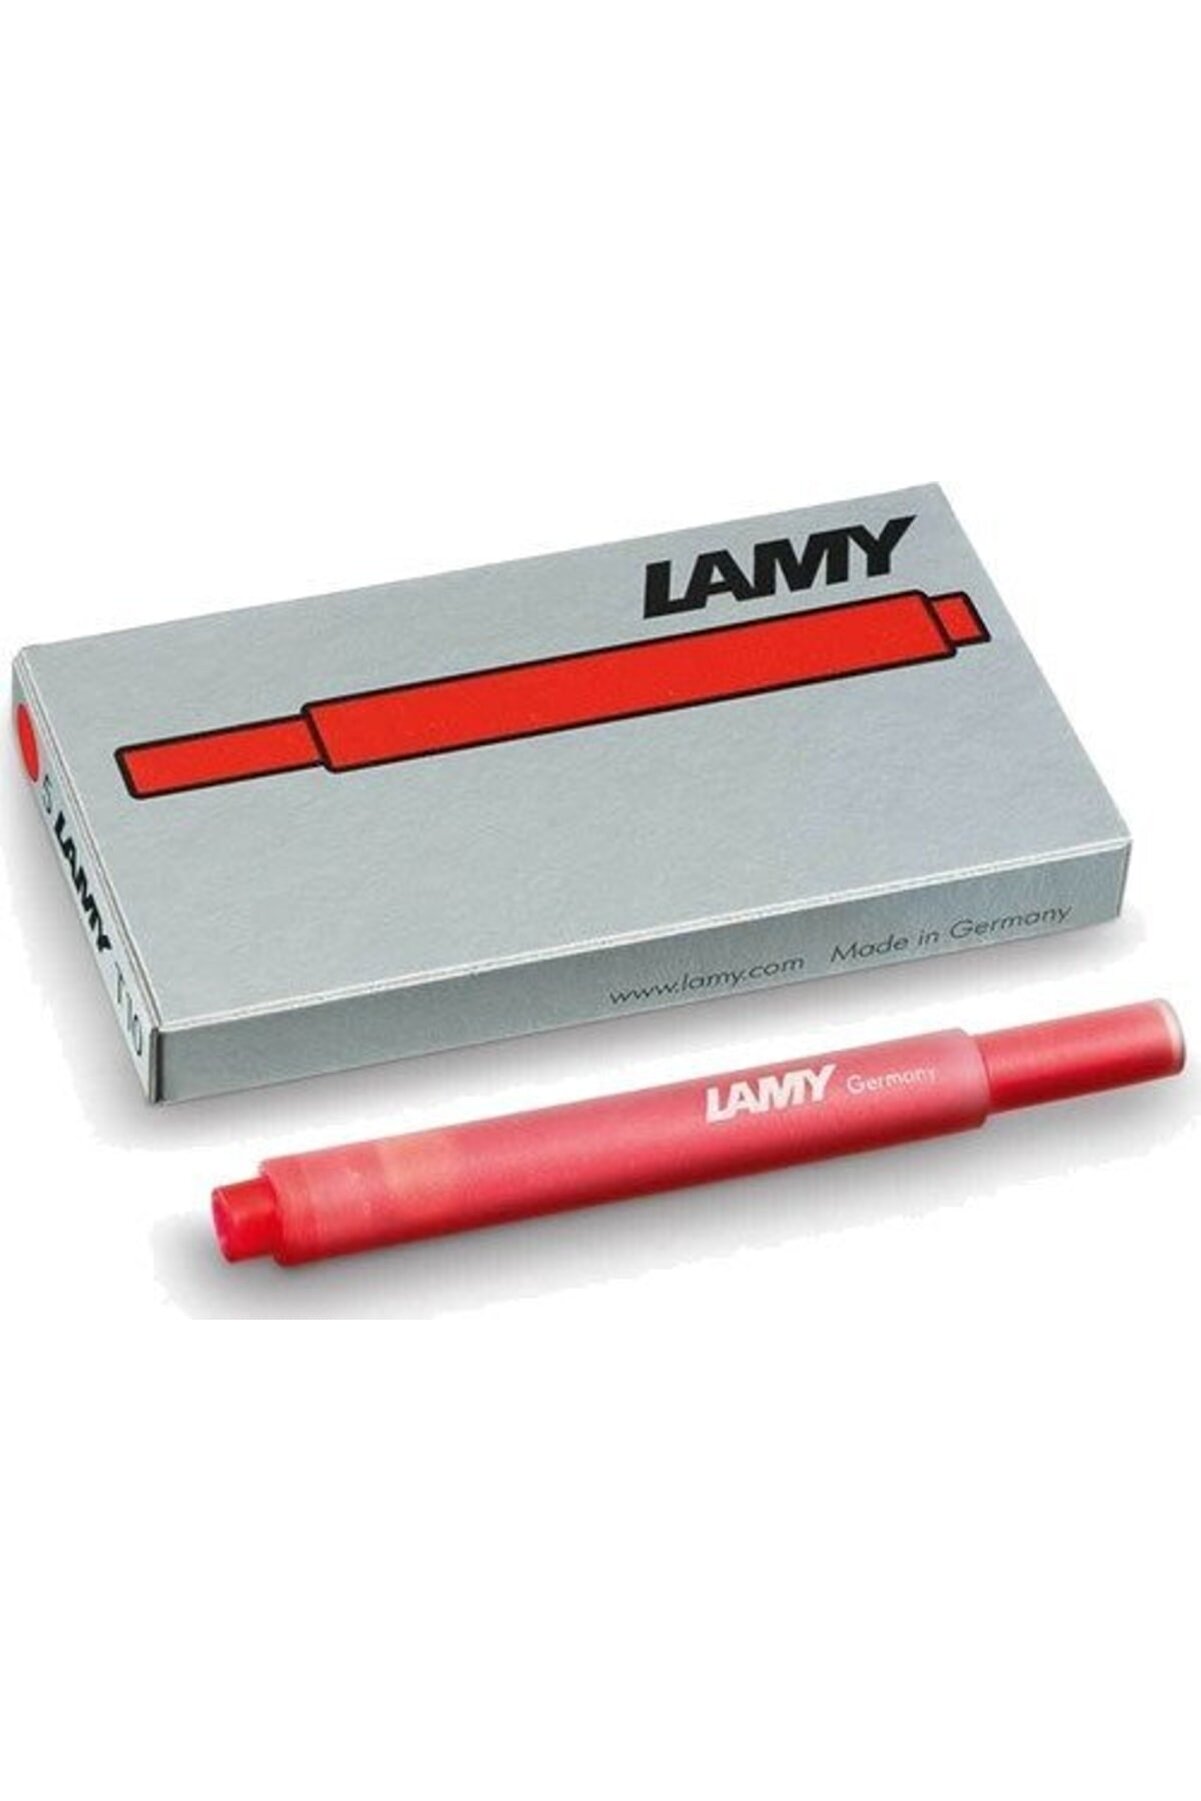 Lamy T10-k Kırmızı Dolma Kalem Kartuşu